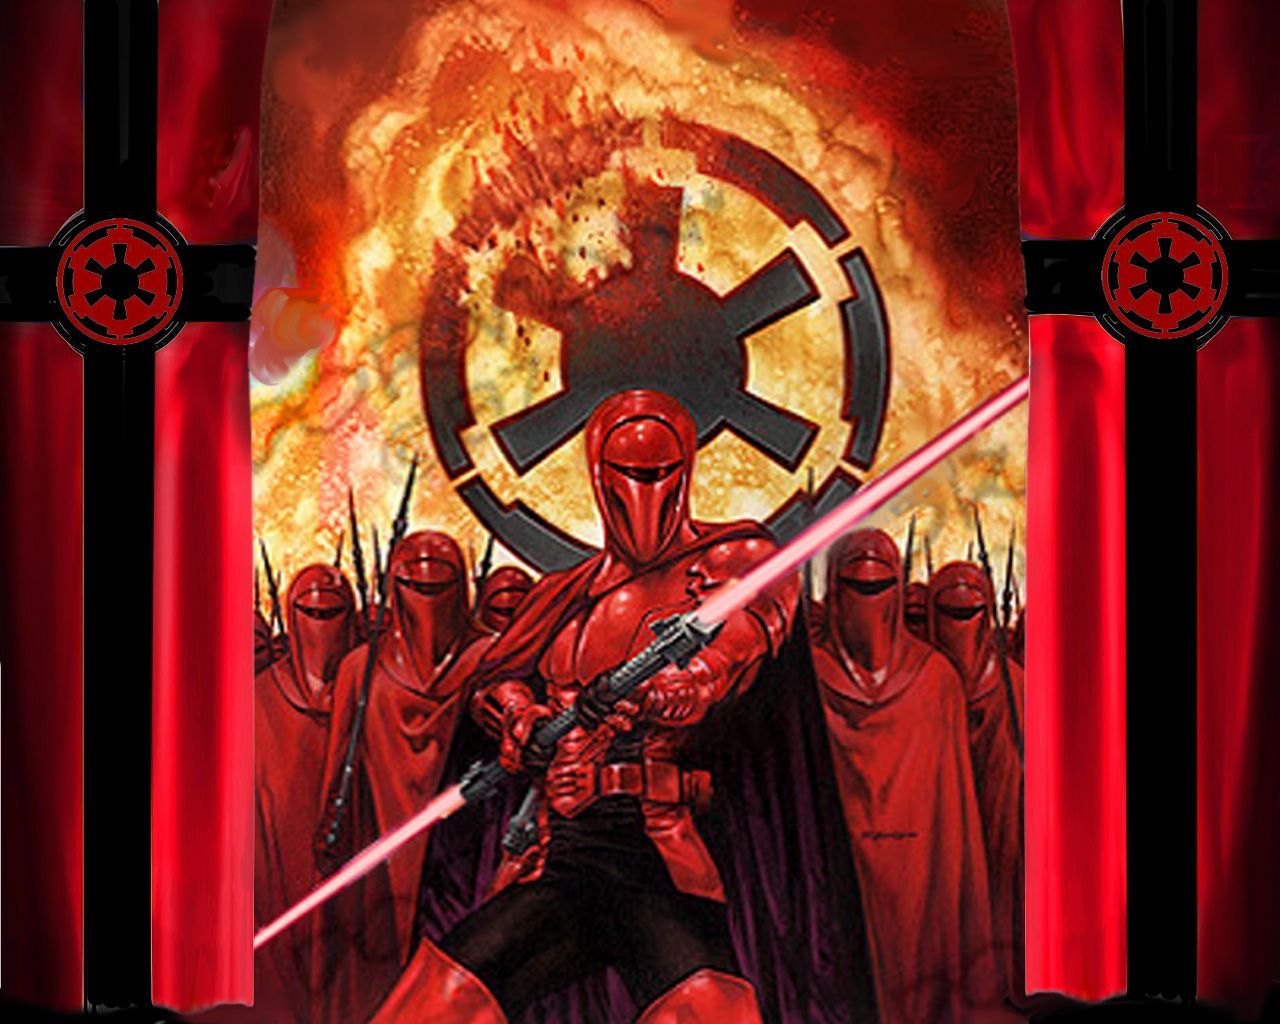 Crimson Empire Wallpaper. Star wars wallpaper, Star wars fan art, Star wars empire